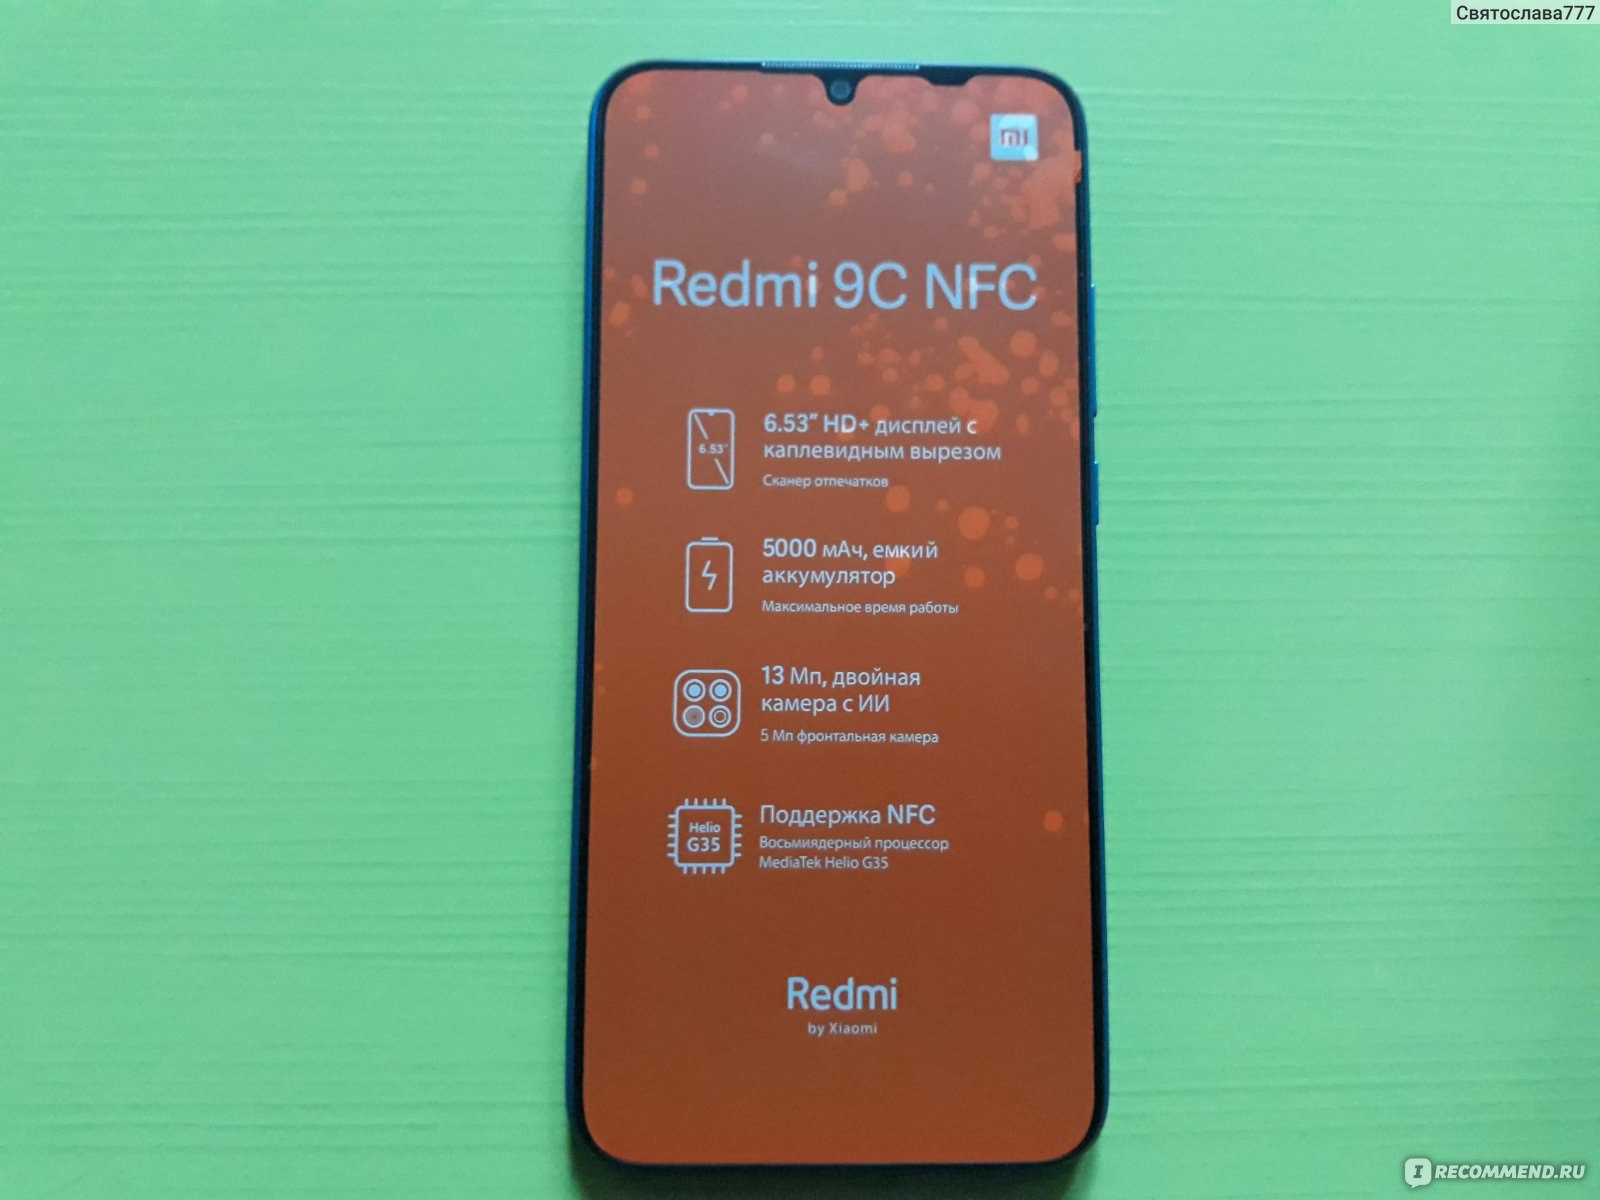 Redmi 9c 64 nfc. Телефон Redmi 9c NFC. Xiaomi Redmi 9c NFC 64gb. Redmi 9c NFC 64 ГБ. Xiaomi Redmi 9c NFC 4/64 ГБ.